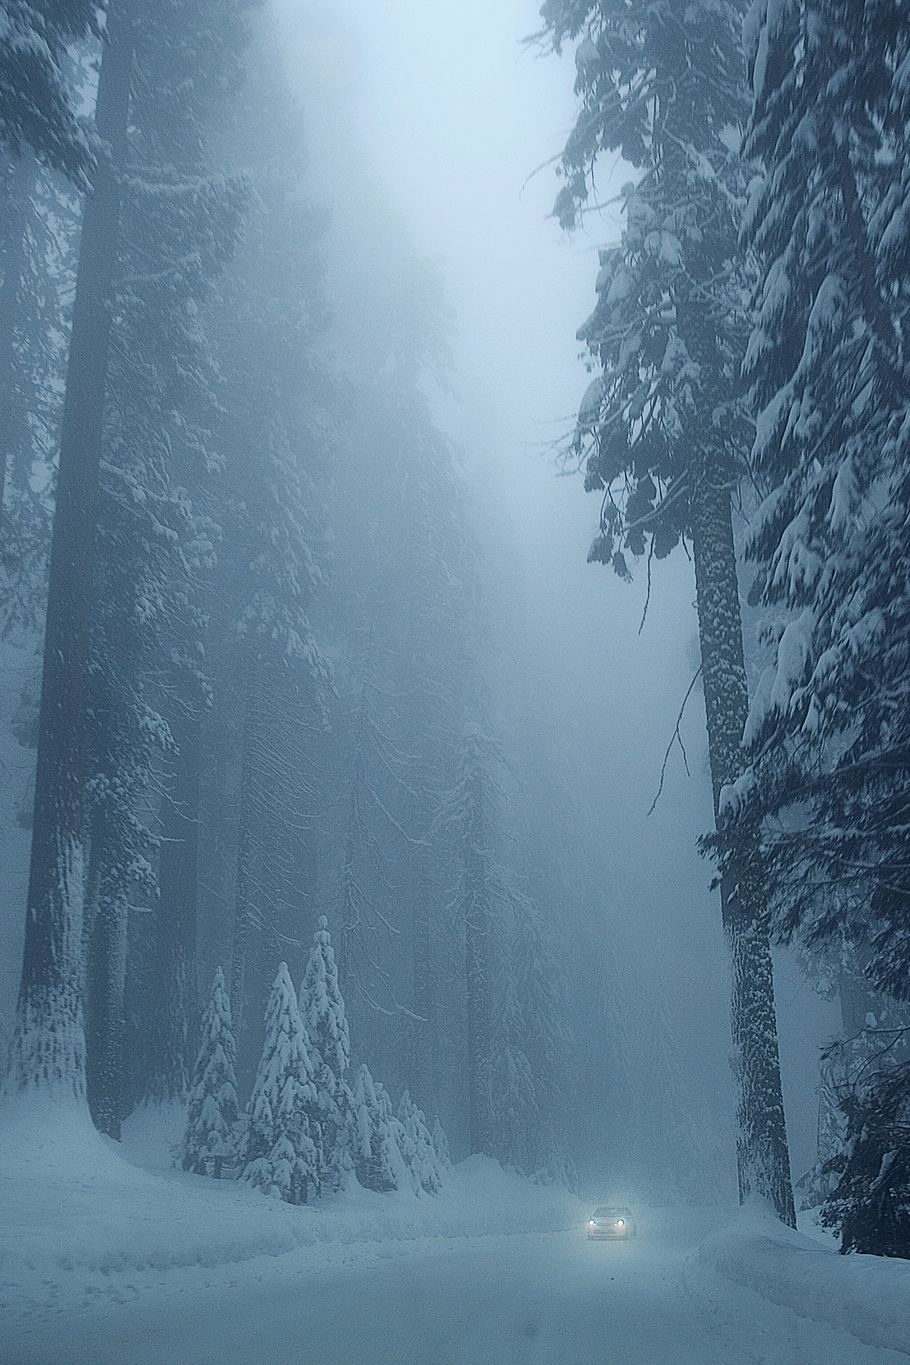 The Forest. Winter scenery, Winter landscape, Winter scenes